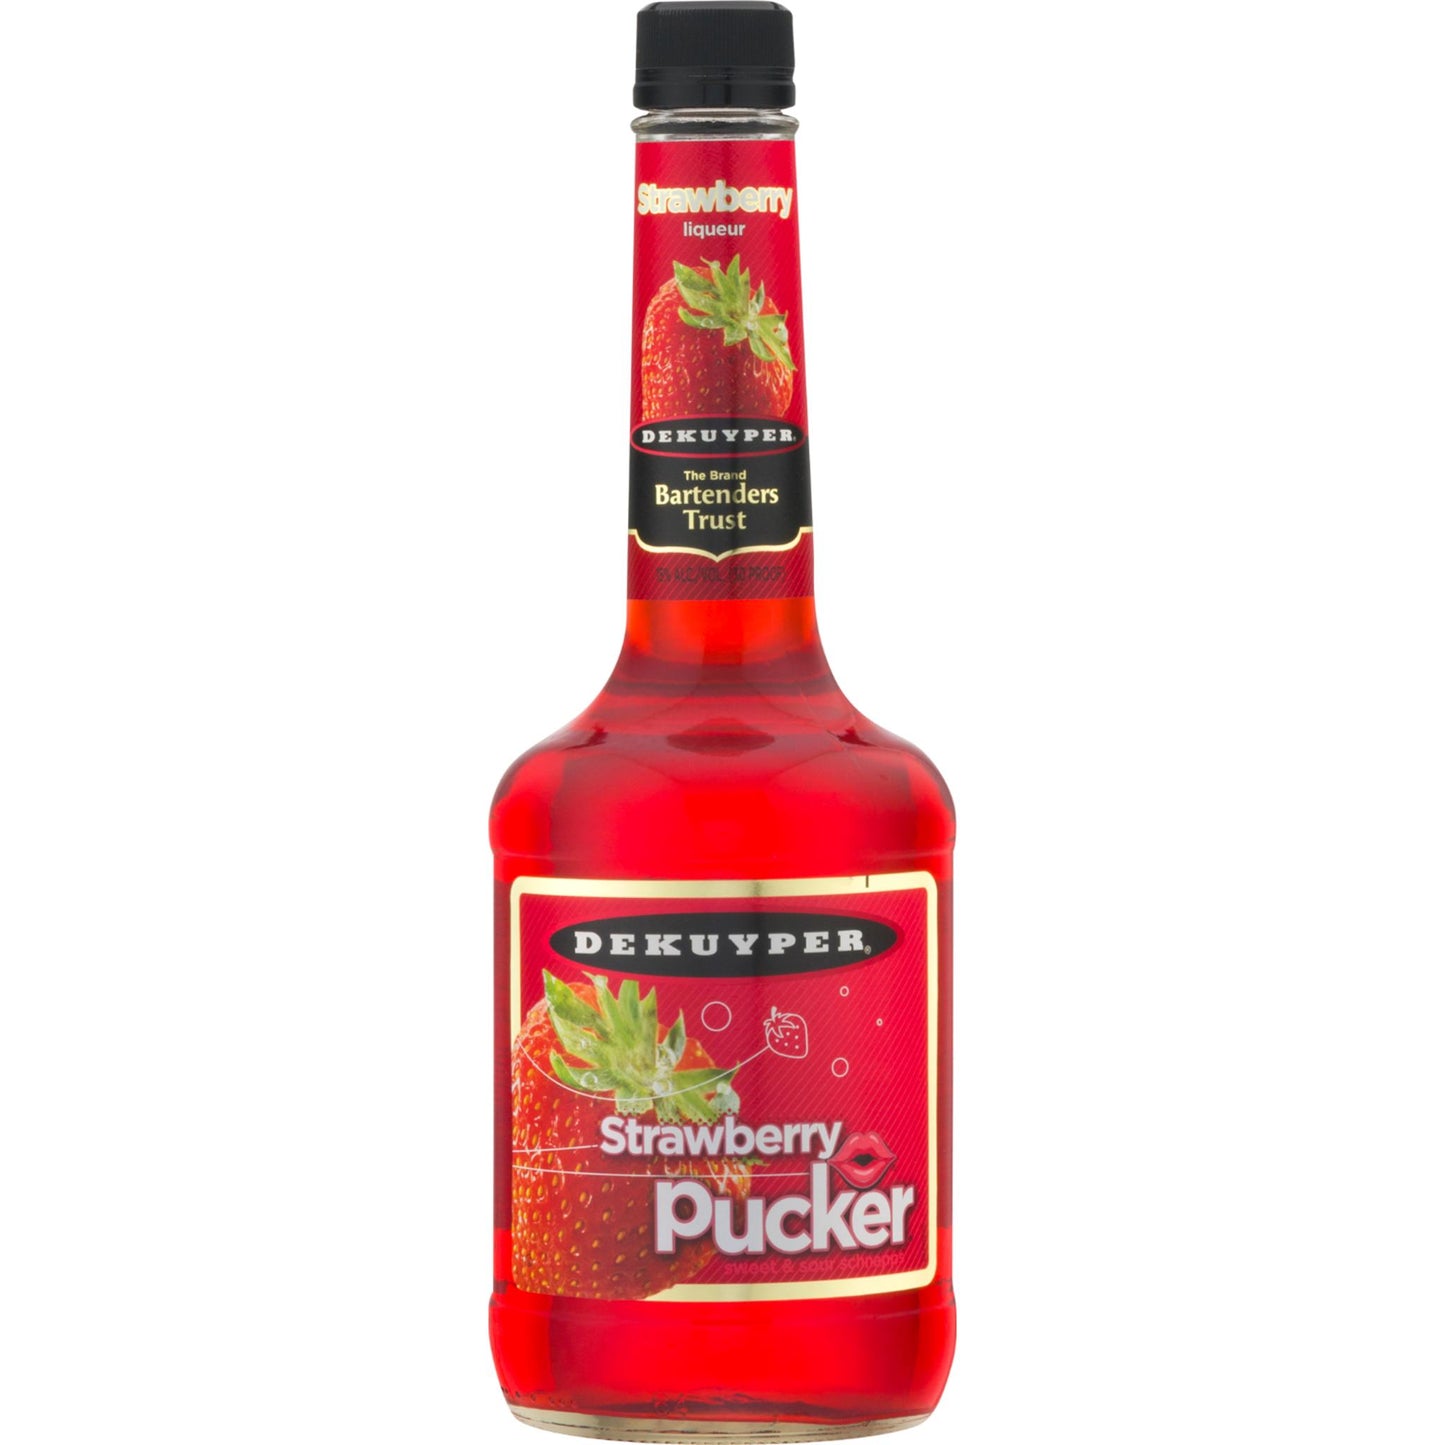 Dekuyper Sour Strawberry Schnapps Pucker - Liquor Geeks